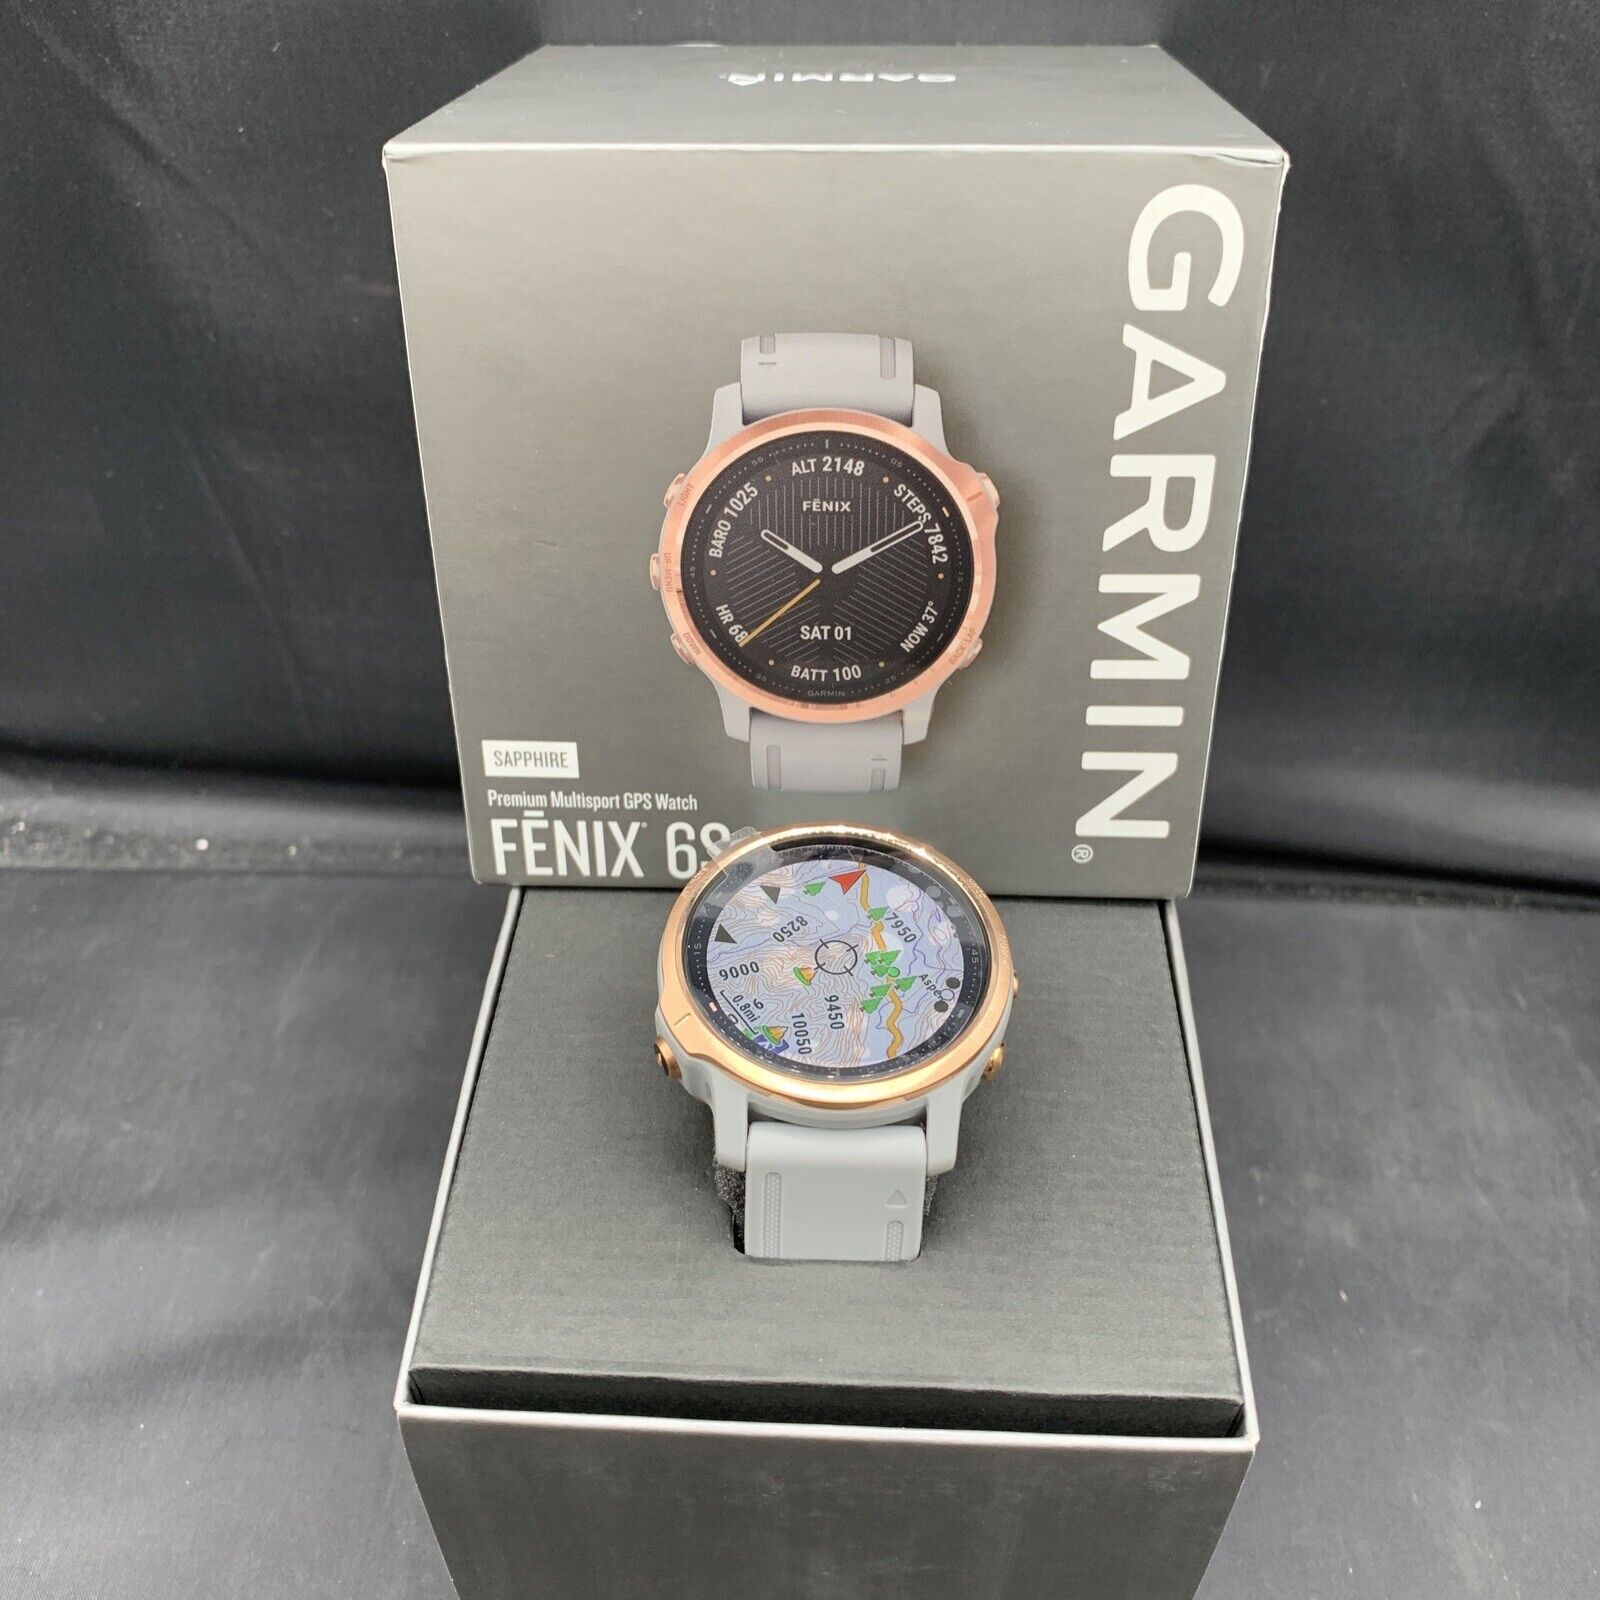 Garmin Fenix 6S Sapphire Premium Multisport GPS Watch - Gray/Ros